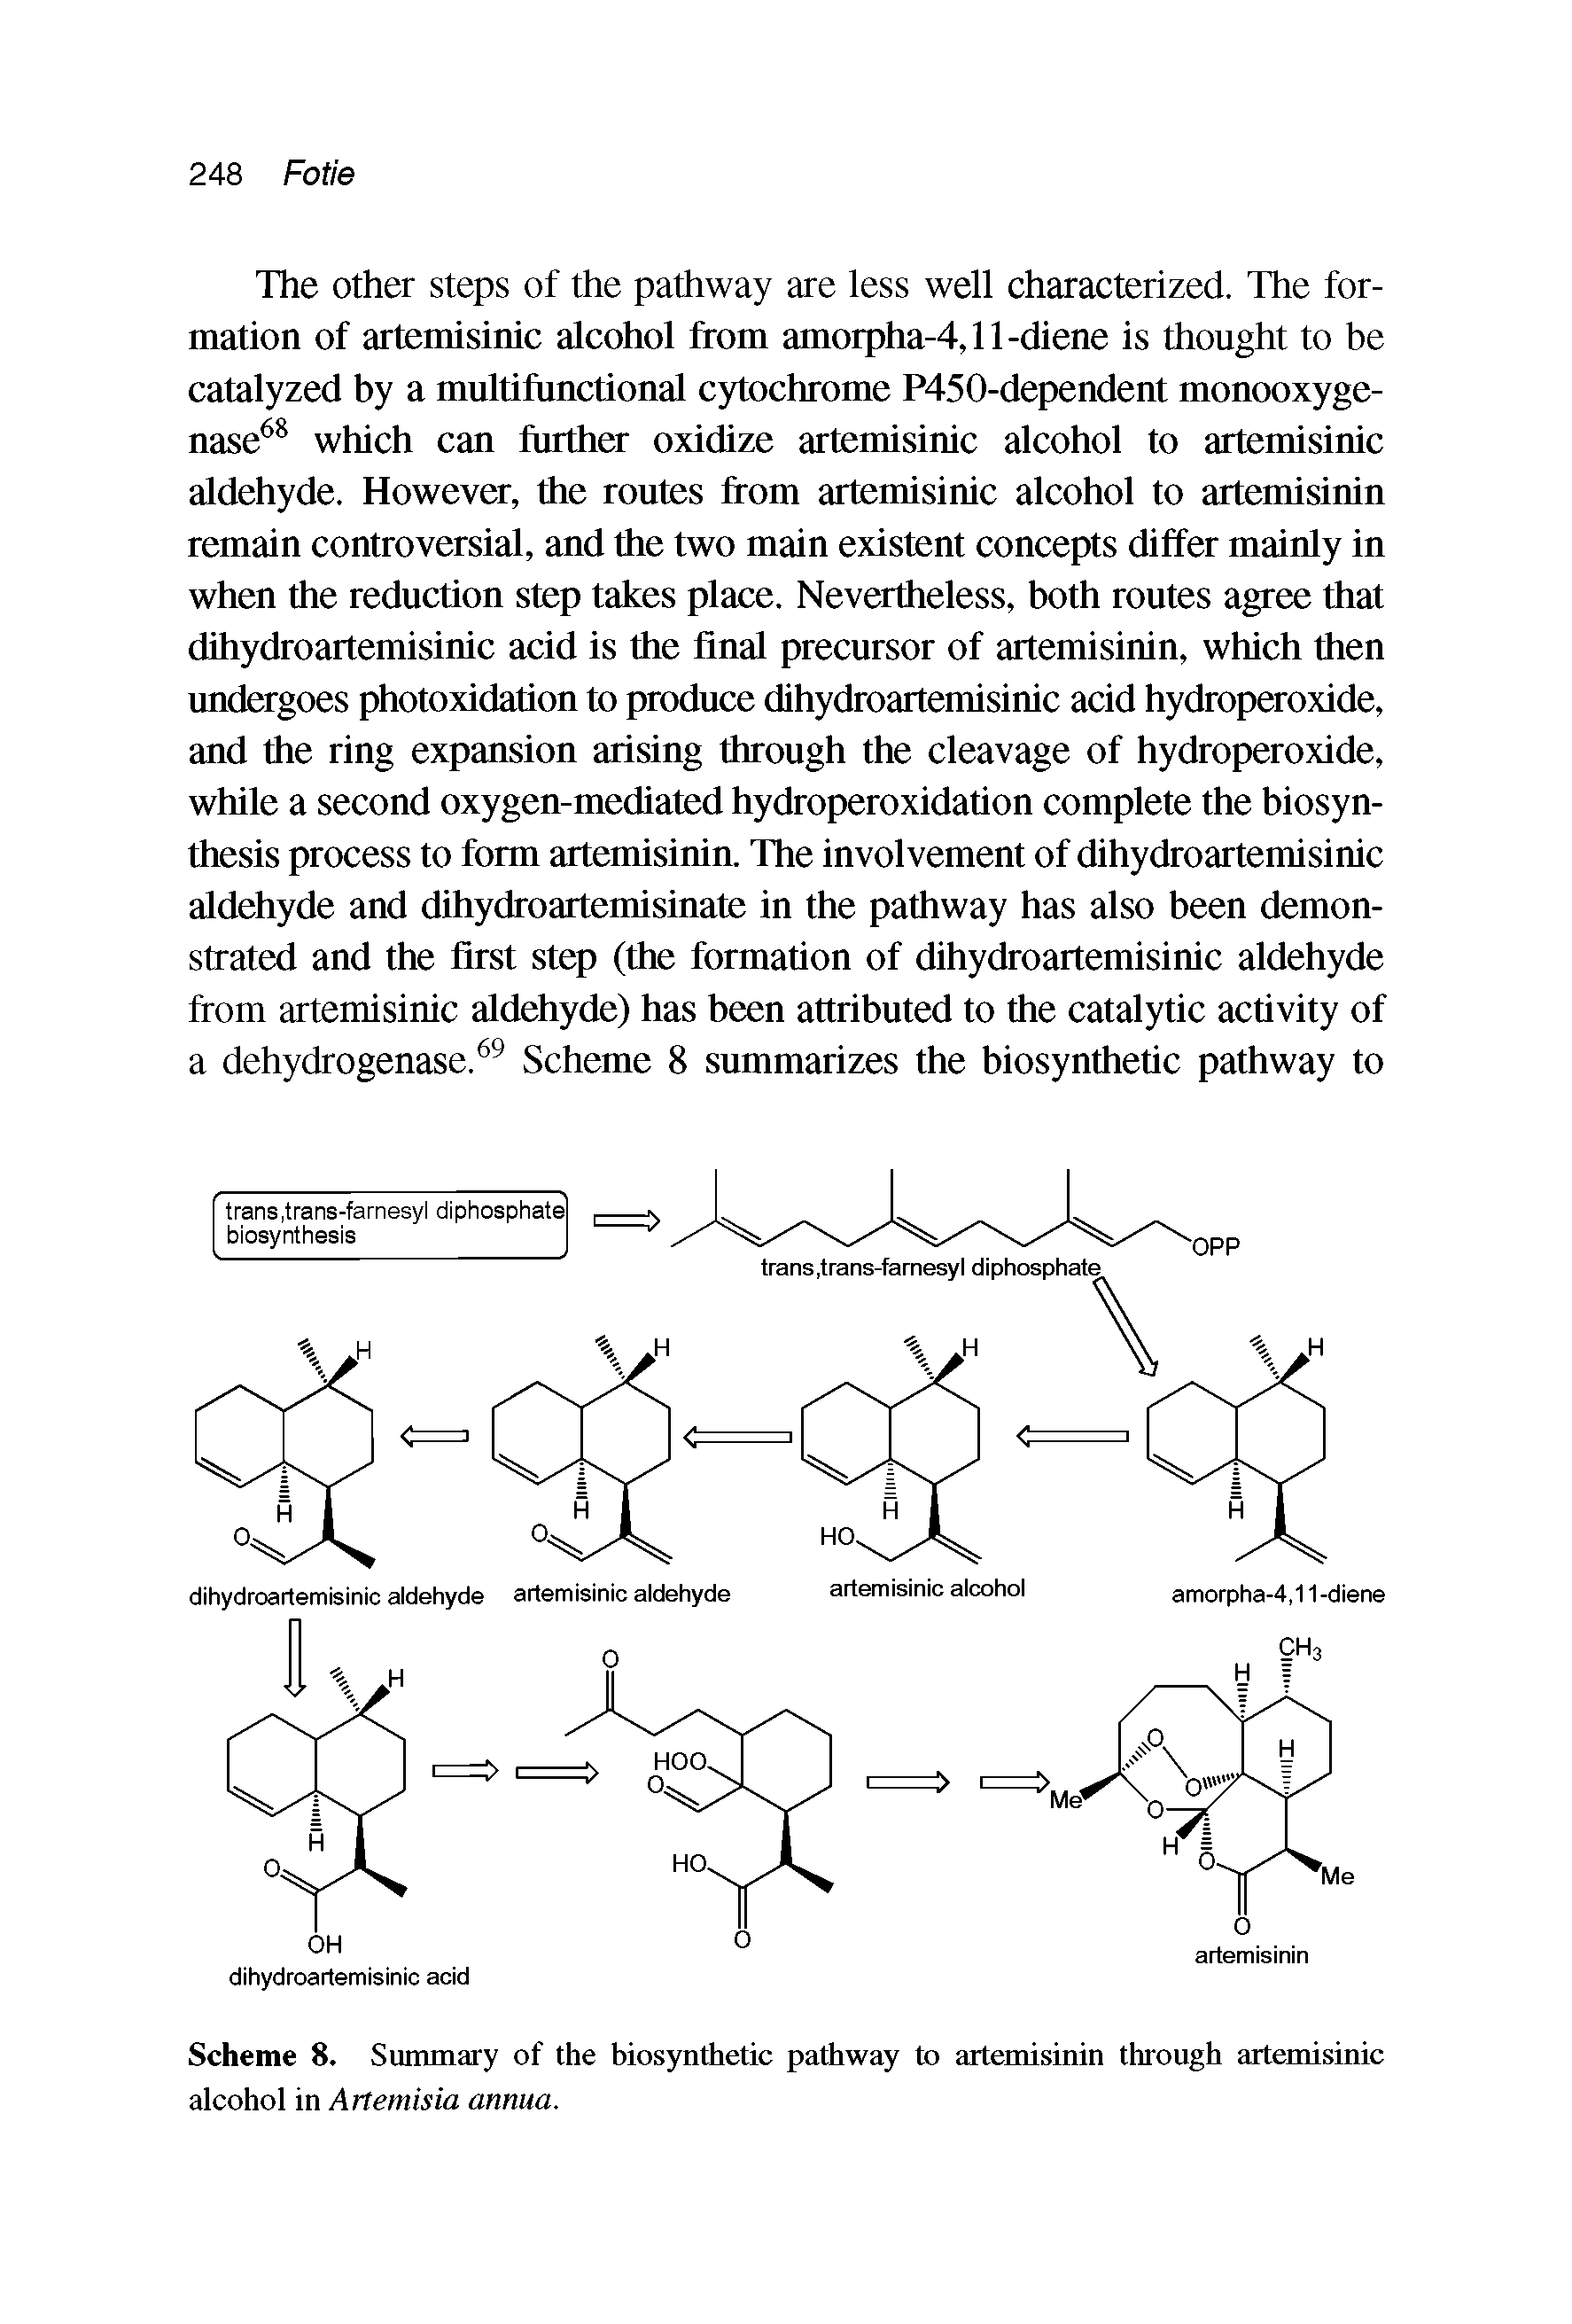 Scheme 8. Summary of the biosynthetic pathway to artemisinin through artemisinic alcohol in Artemisia annua.